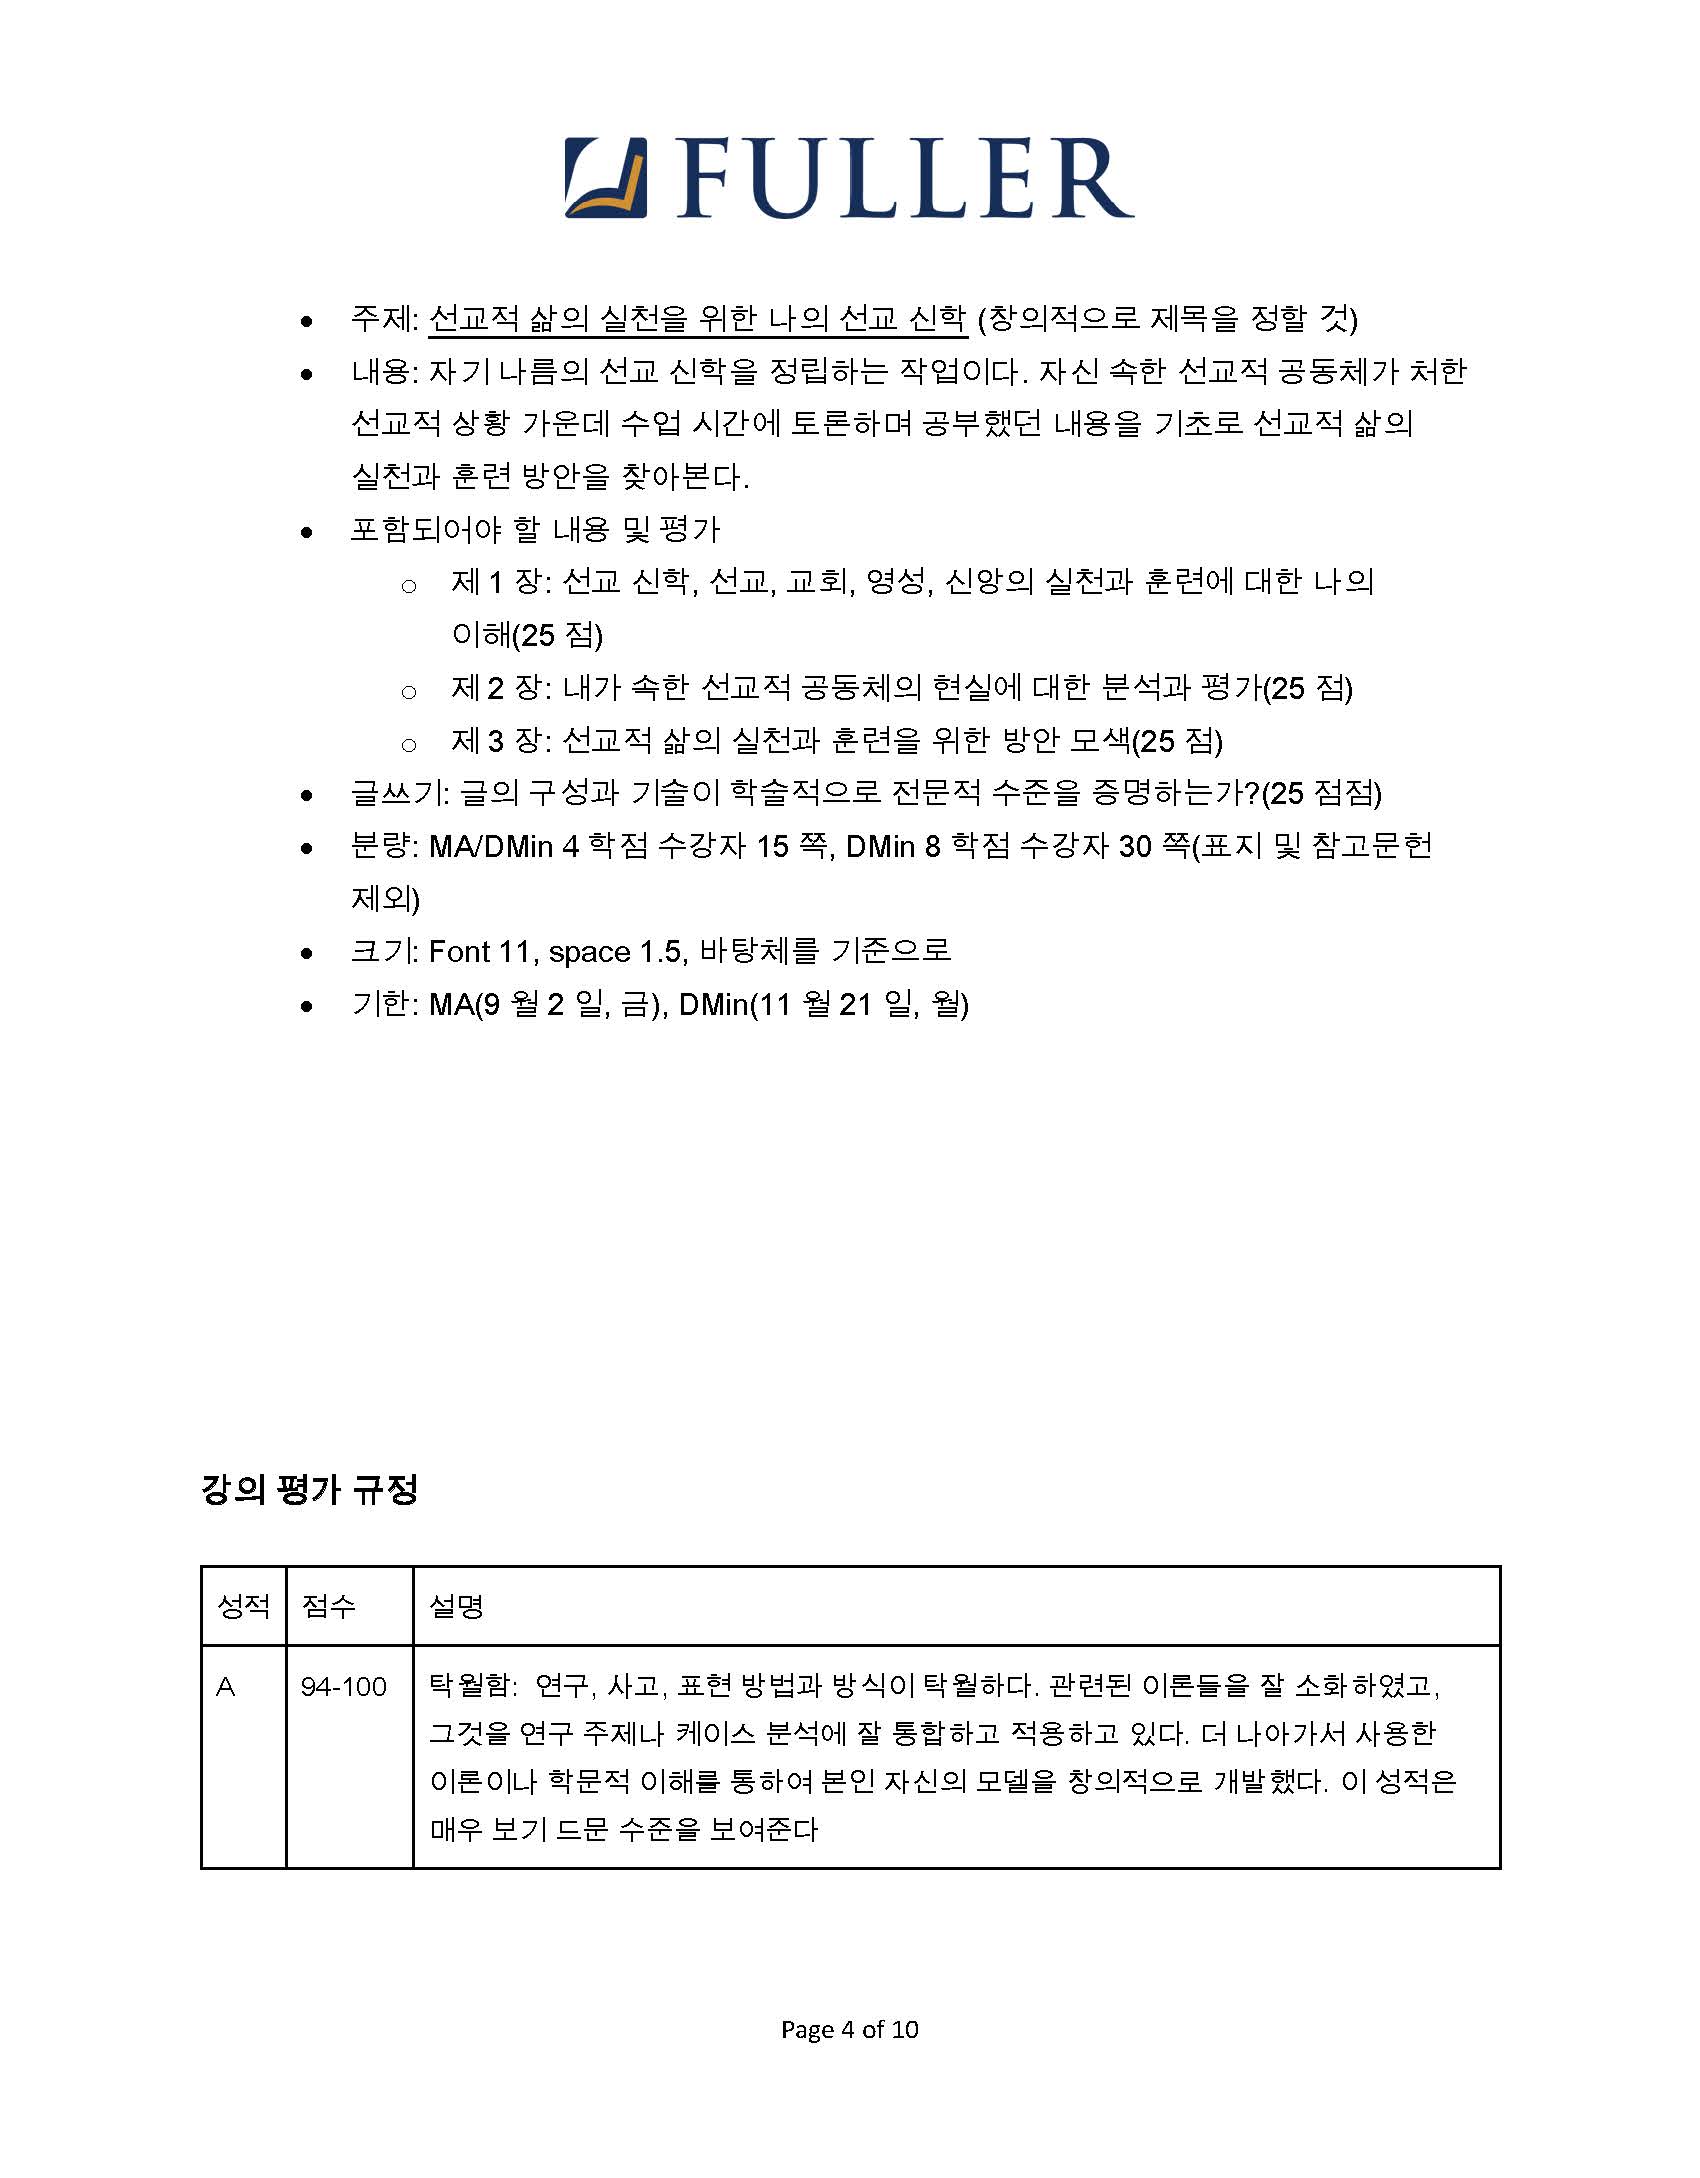 MK765_MT537 Syllabus (Korean)_Page_04.jpg